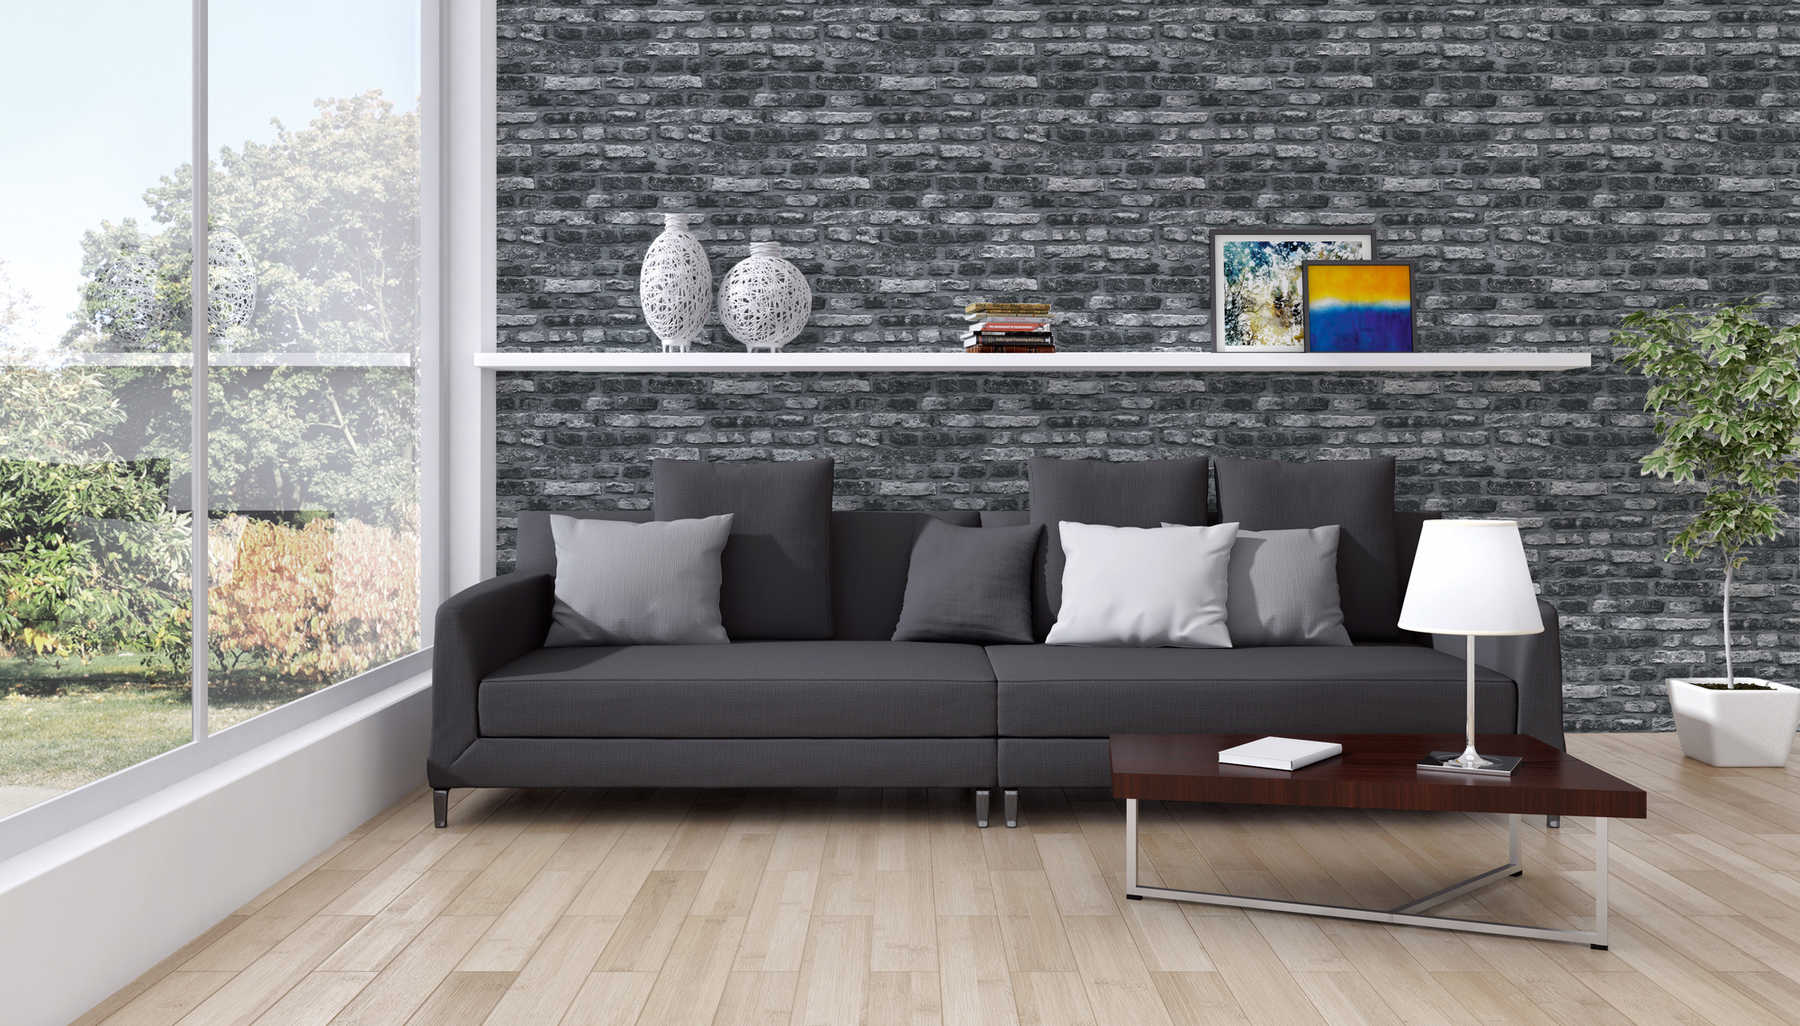             Non-woven wallpaper with stone optics, dark brick masonry - grey, black
        